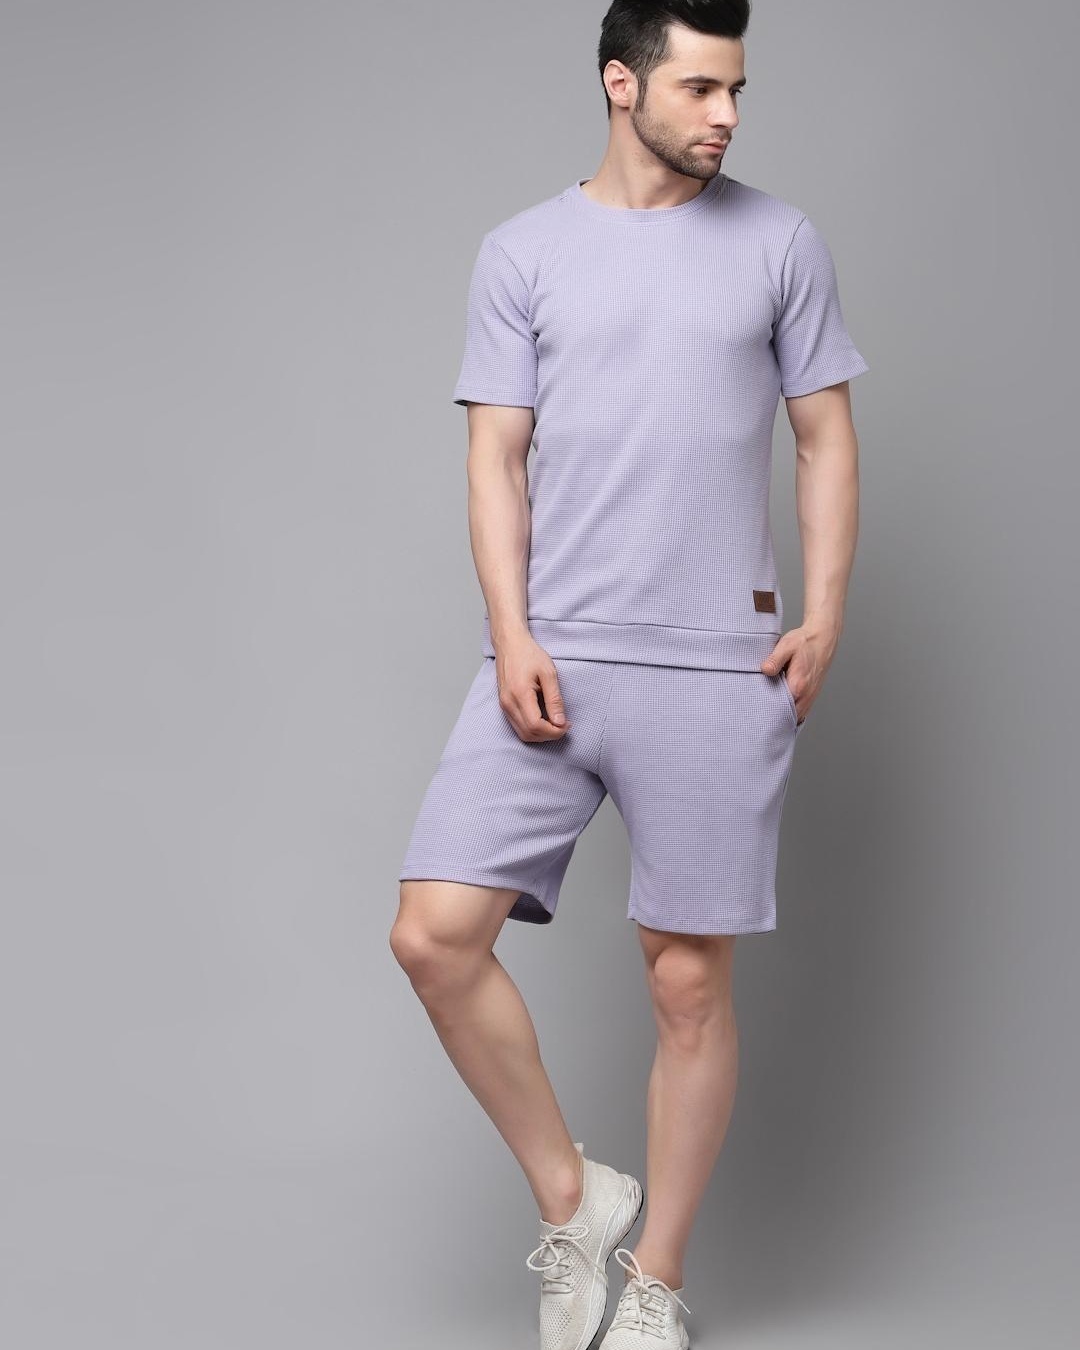 Buy Men's Purple Slim Fit Co-ordinates Online in India at Bewakoof